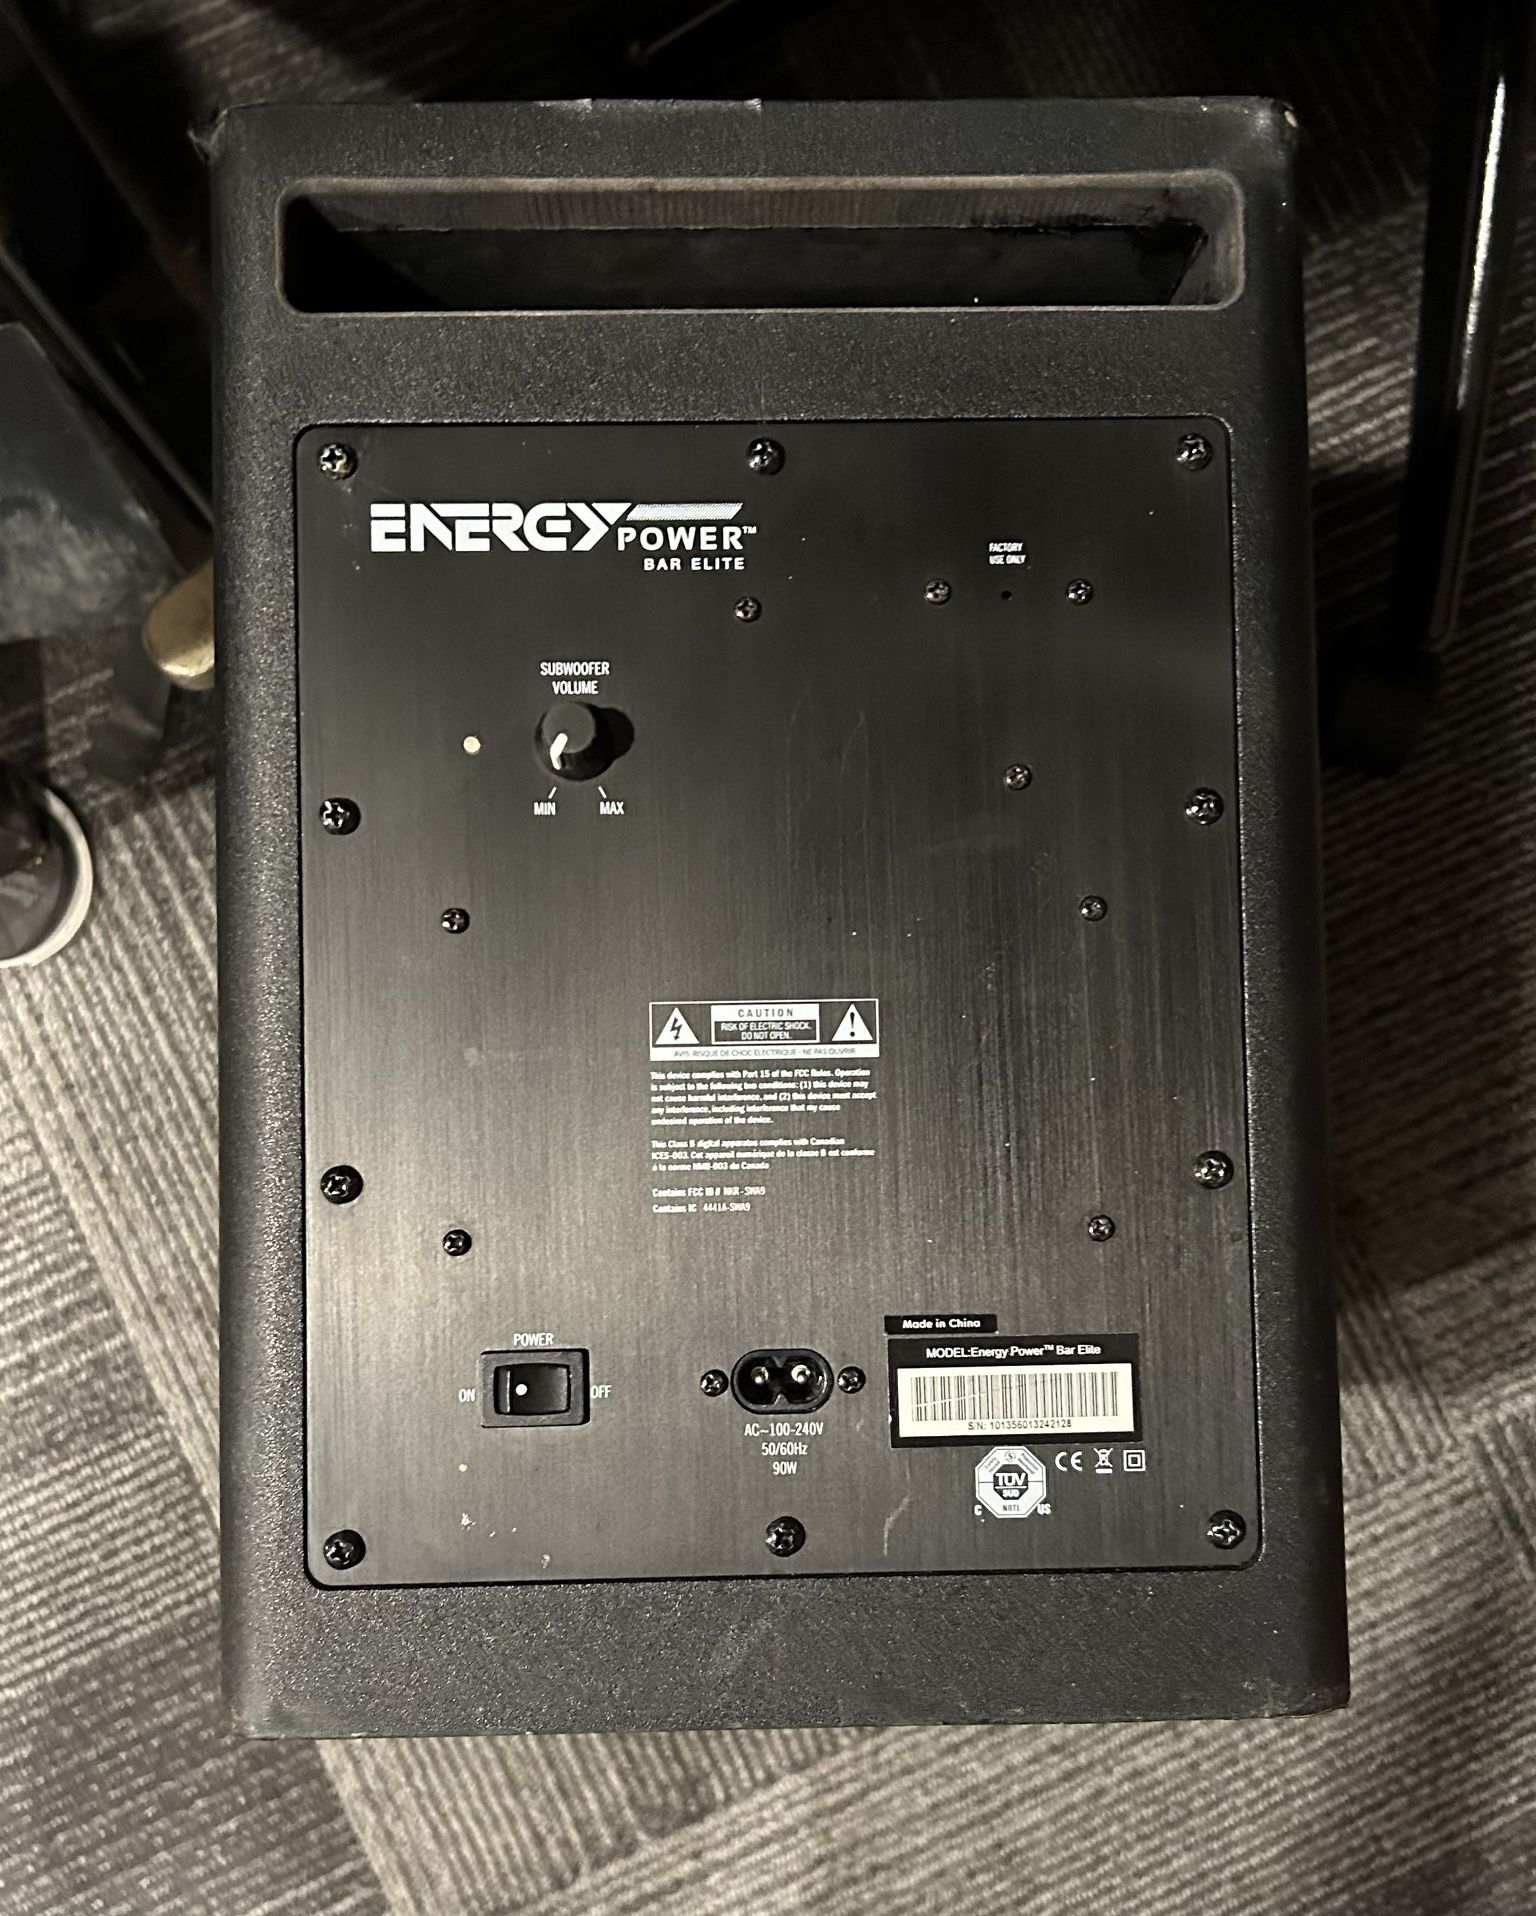 Klipsch Energy Power Bar Elite with wireless subwoofer